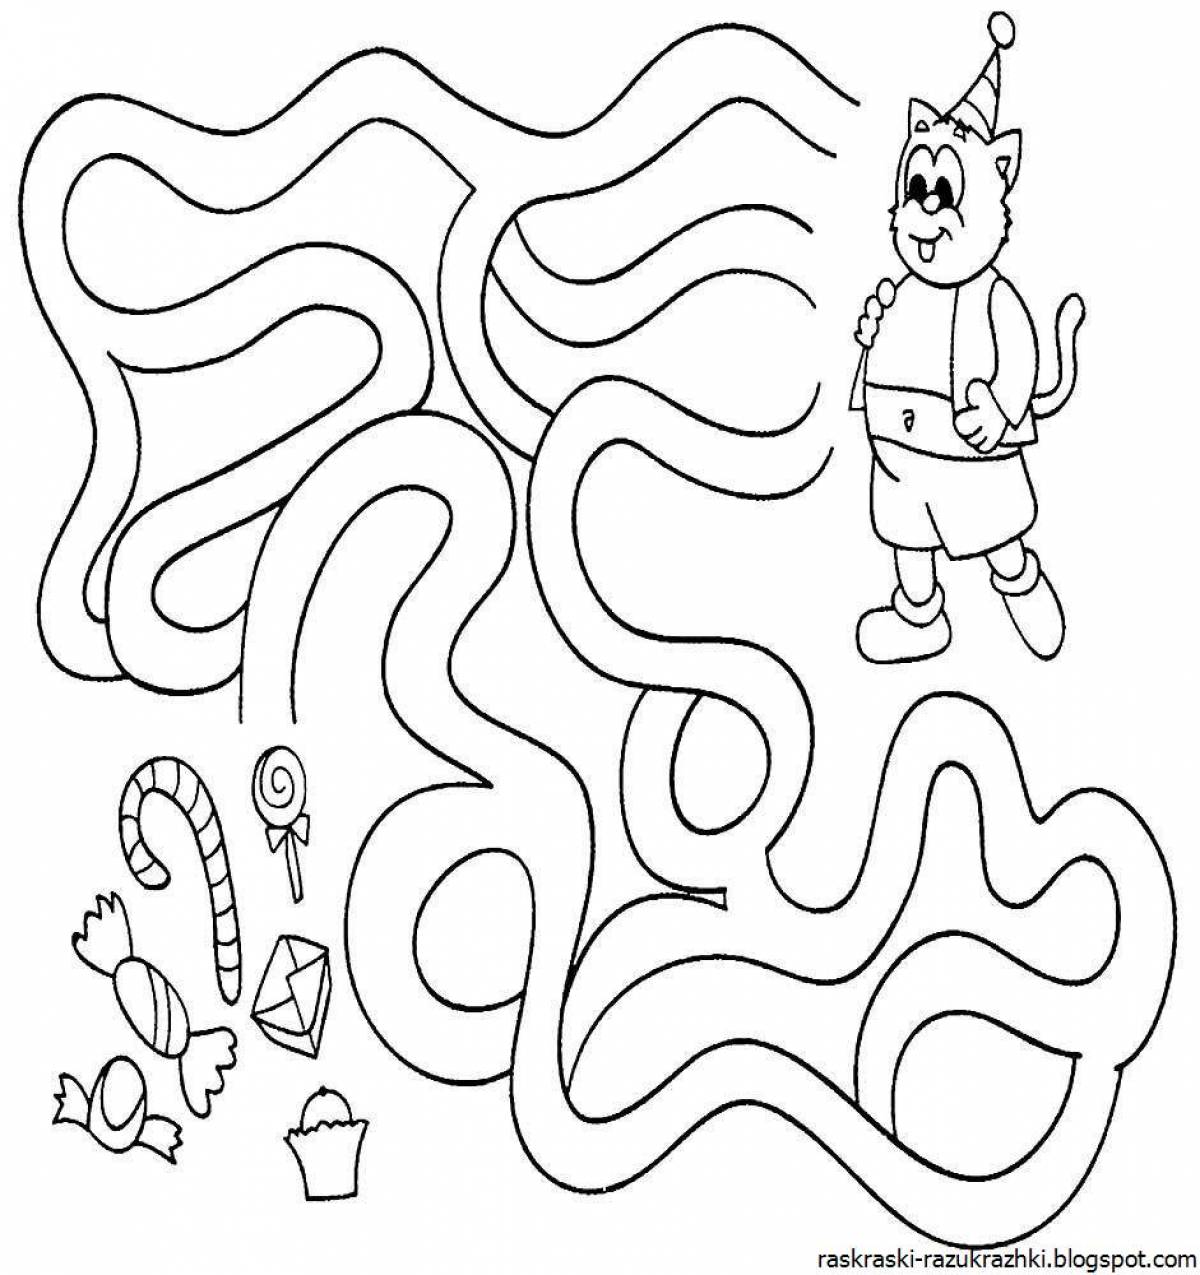 Coloring dreamy maze